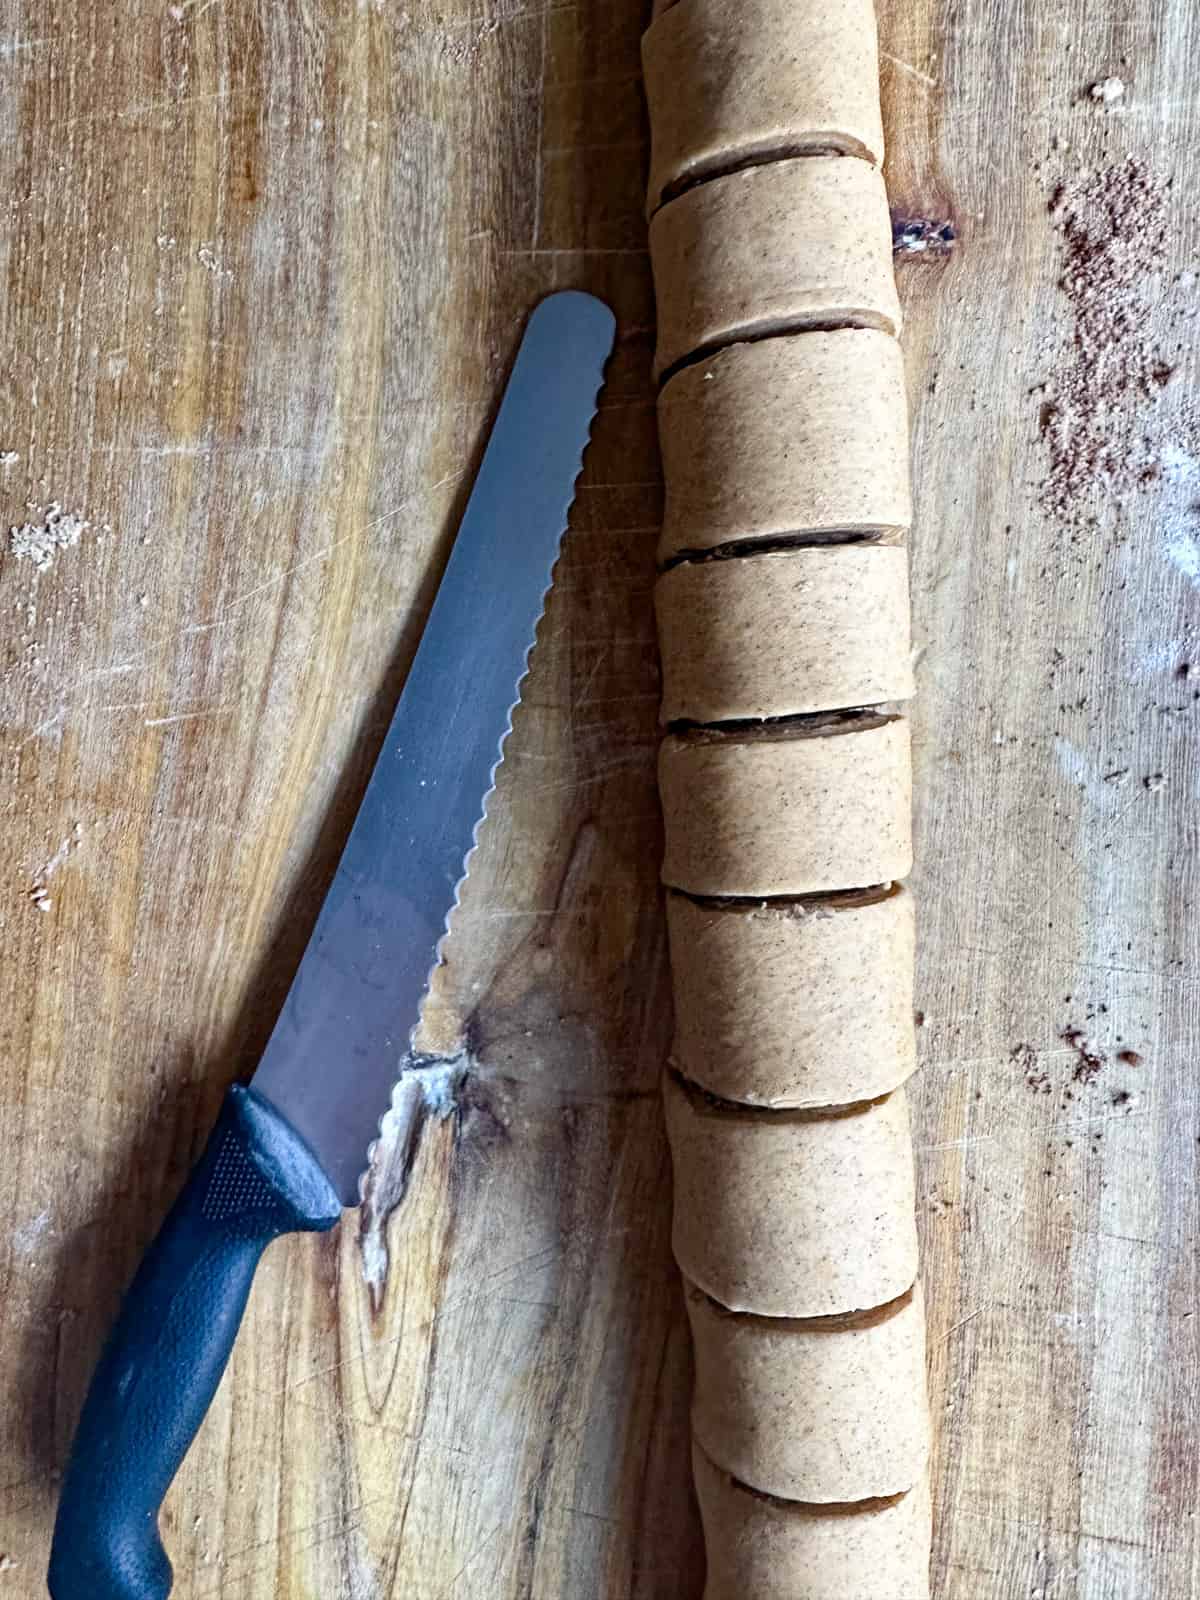 Using a serrated knife to cut the cinnamon rolls. 